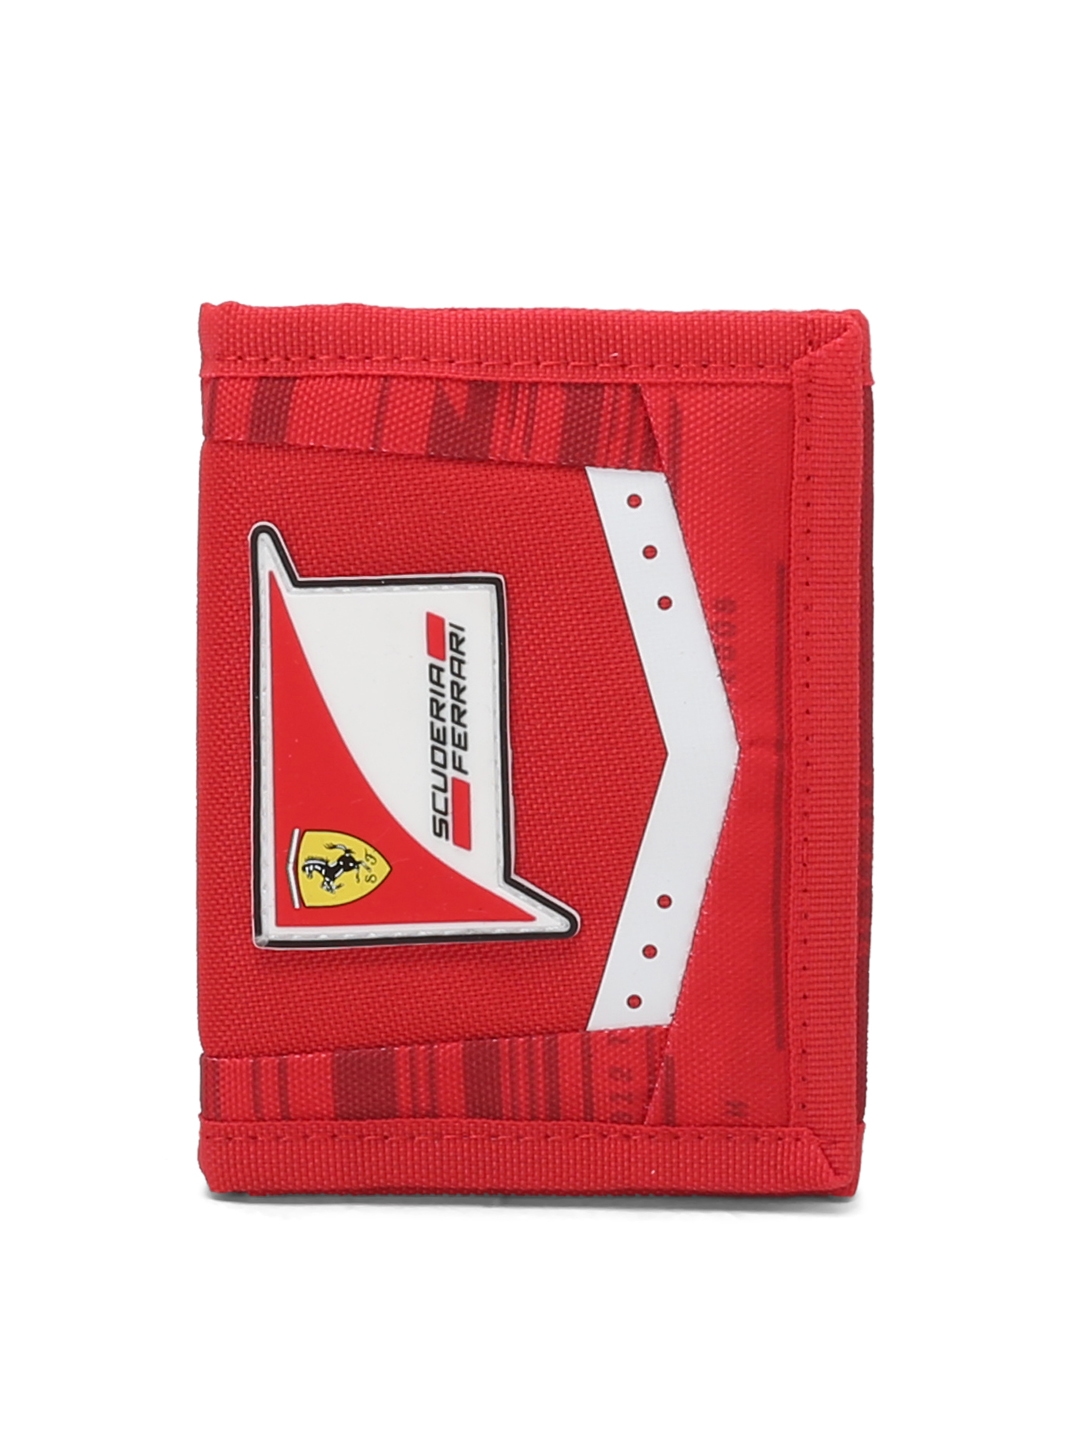 Puma Red Ferrari Wallet | vlr.eng.br